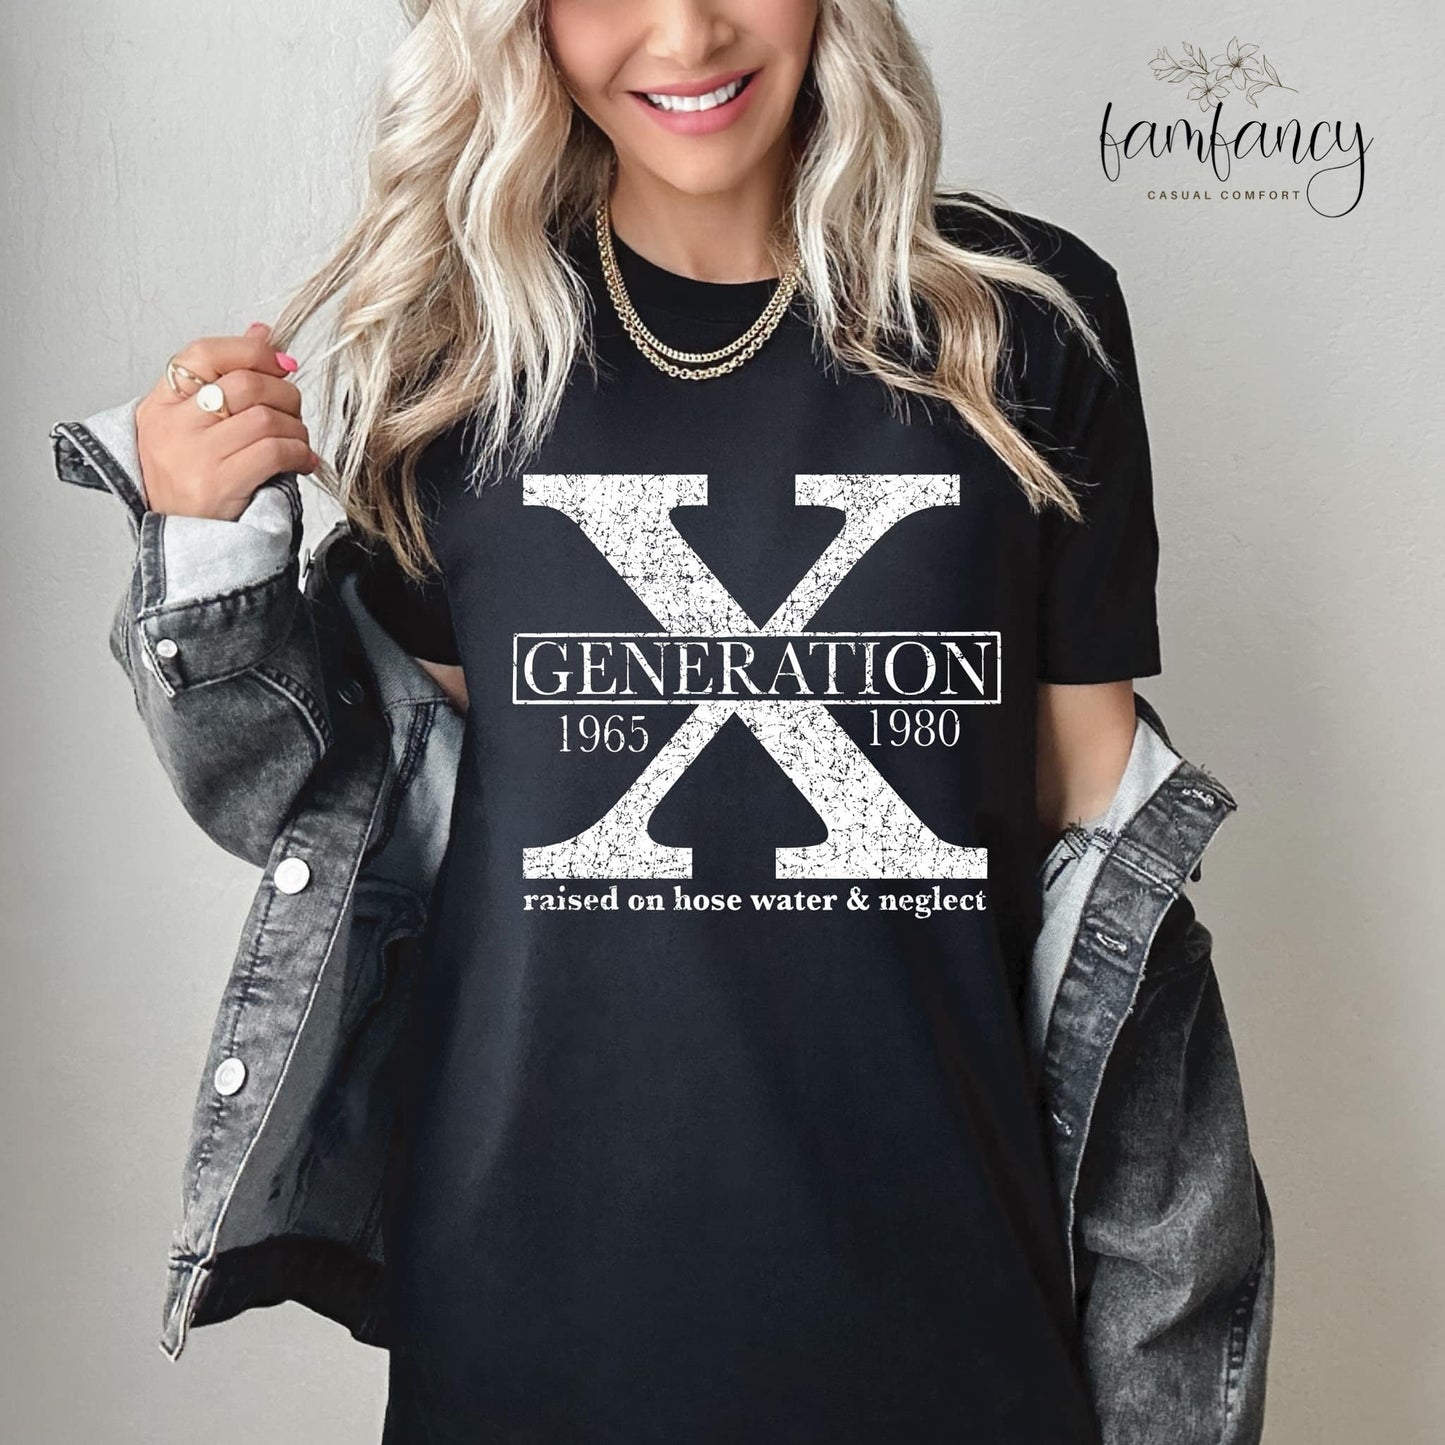 Generation X - FamFancy Boutique